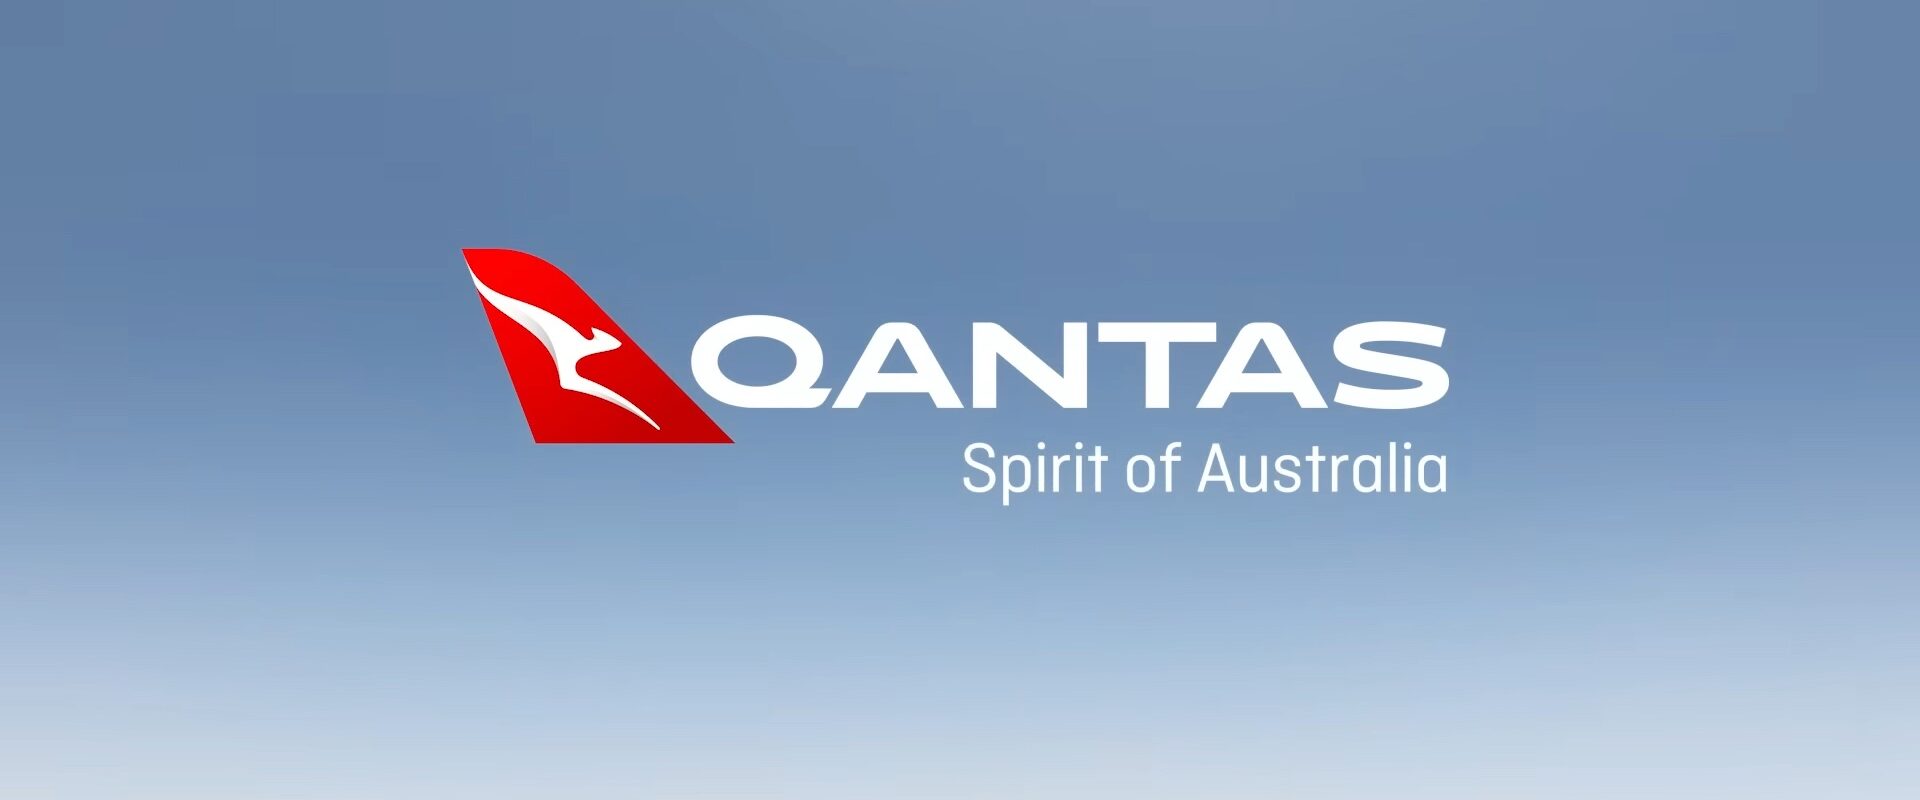 Qantas Safety Video